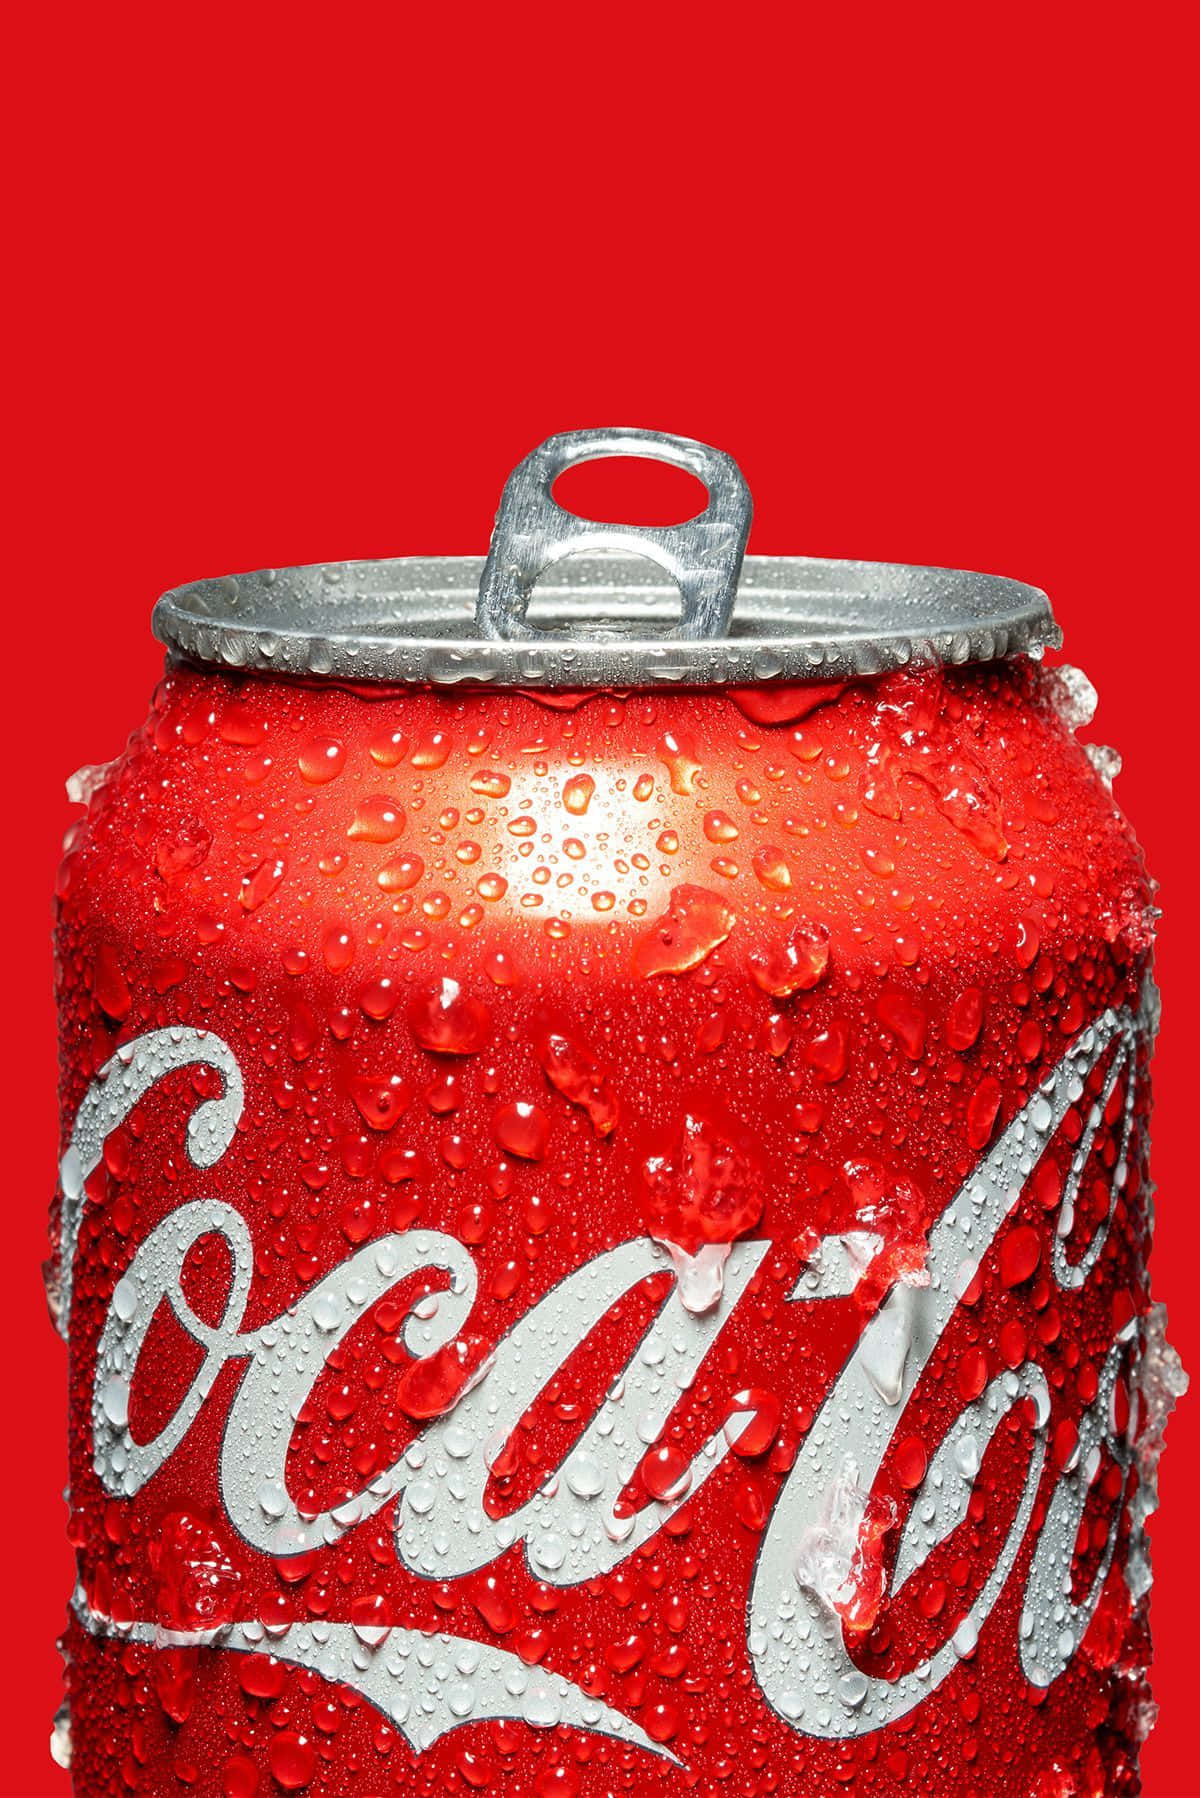 Delicious Coca-Cola - The Perfect Summer Drink